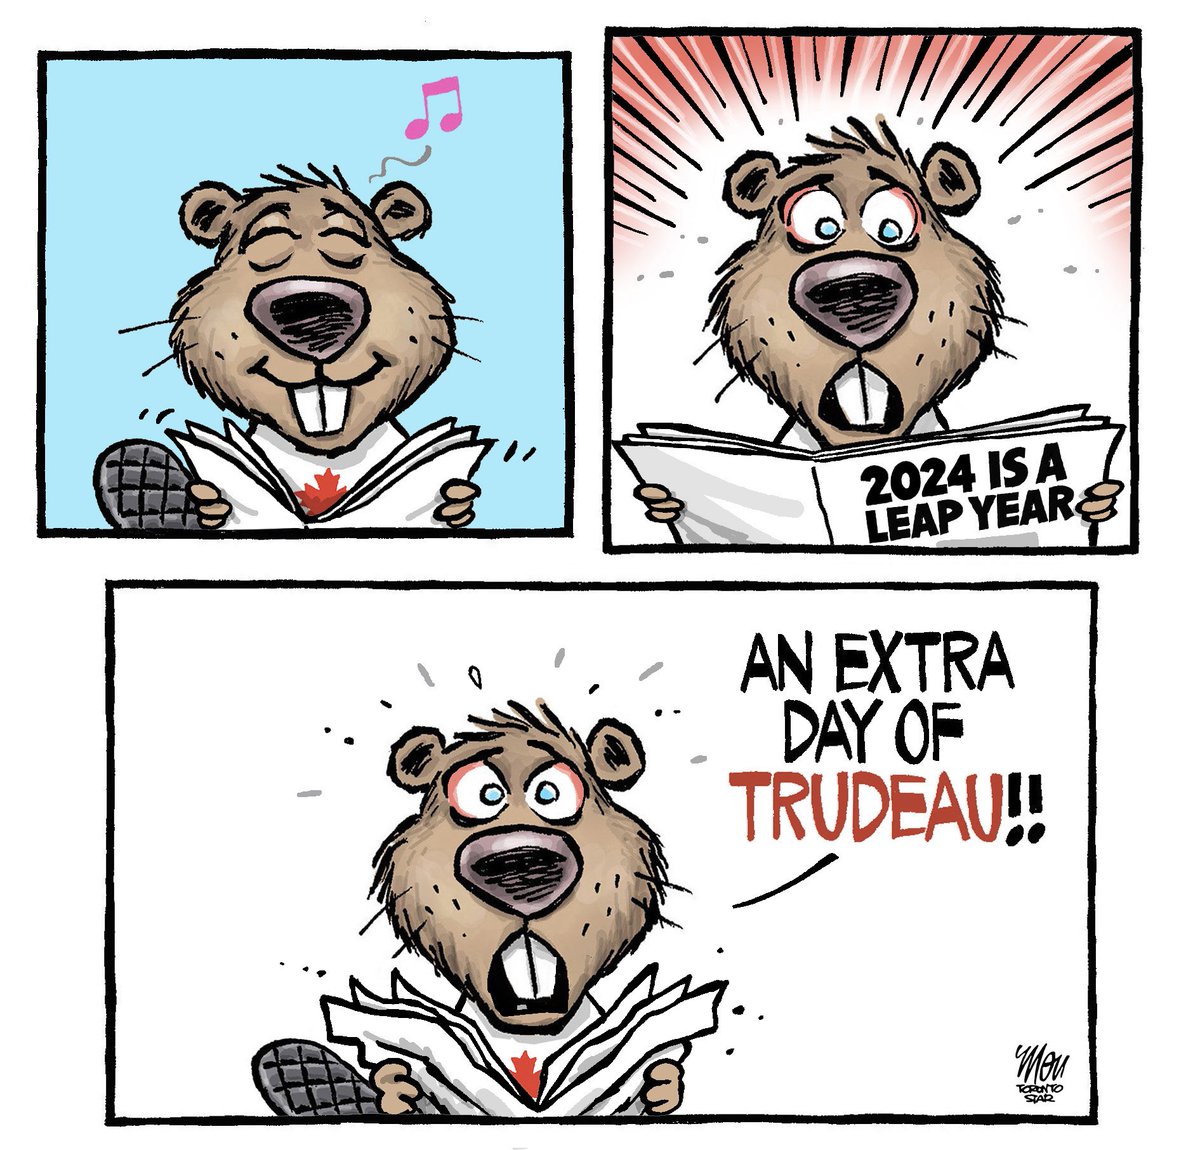 Please enjoy my cartoon for Wednesday's @TorontoStar